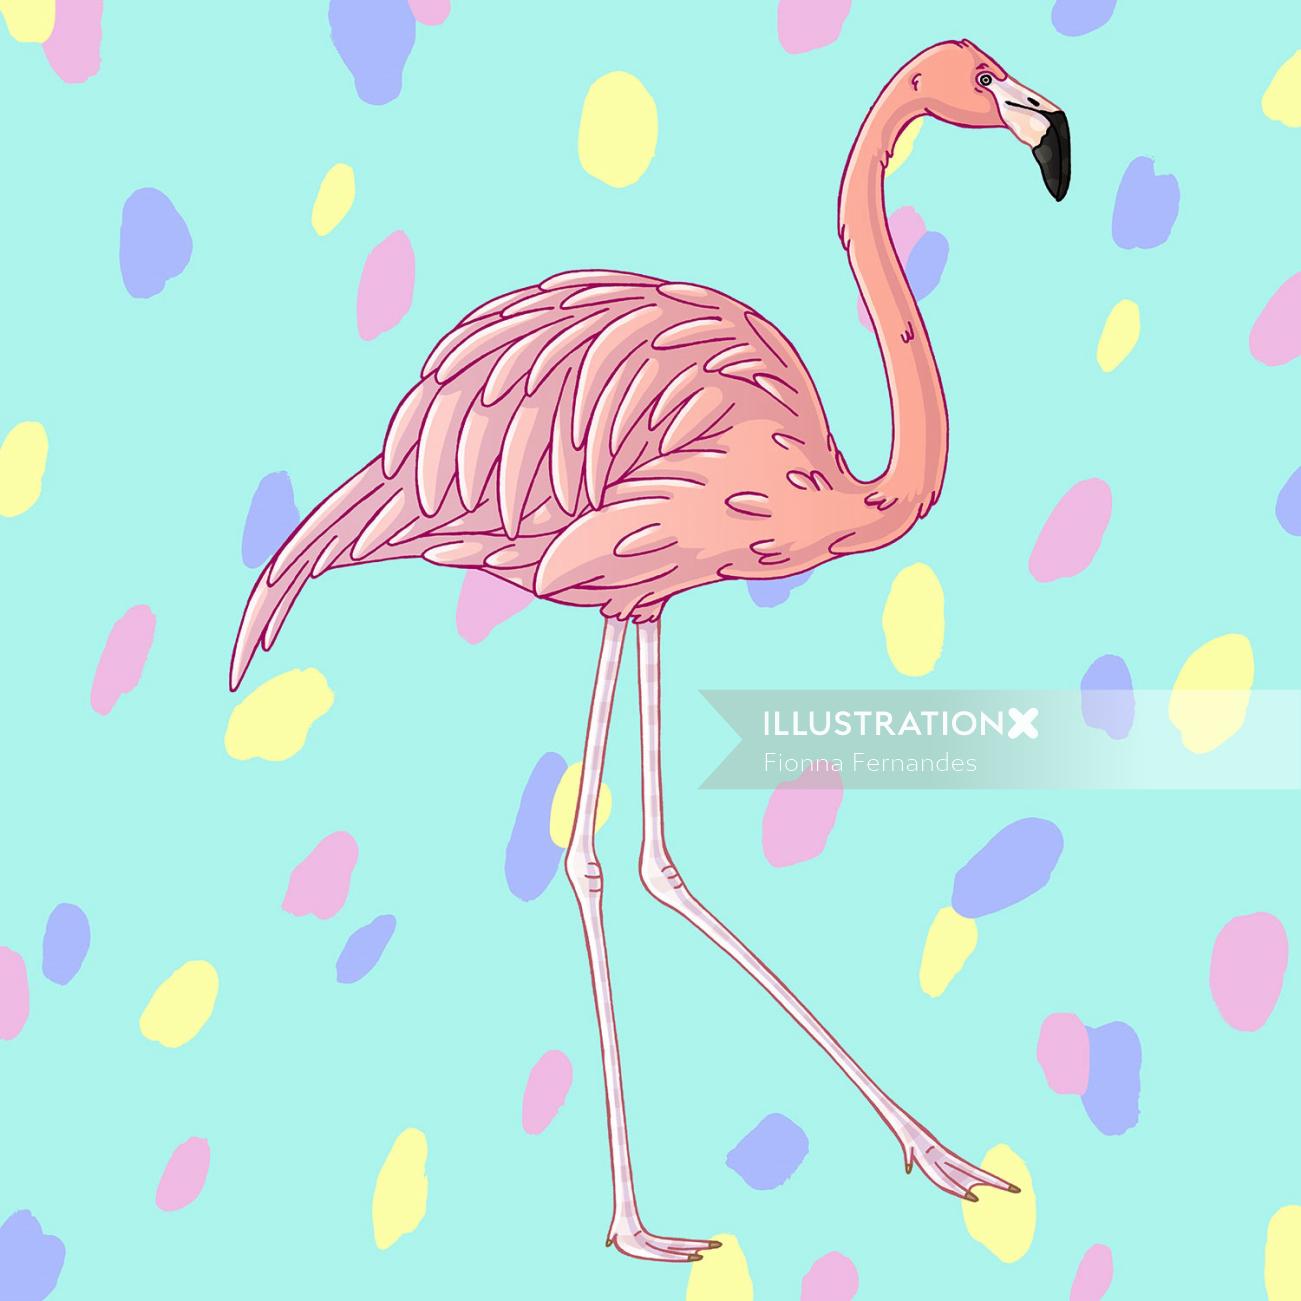 Fun & vibrant artwork of a flamingo